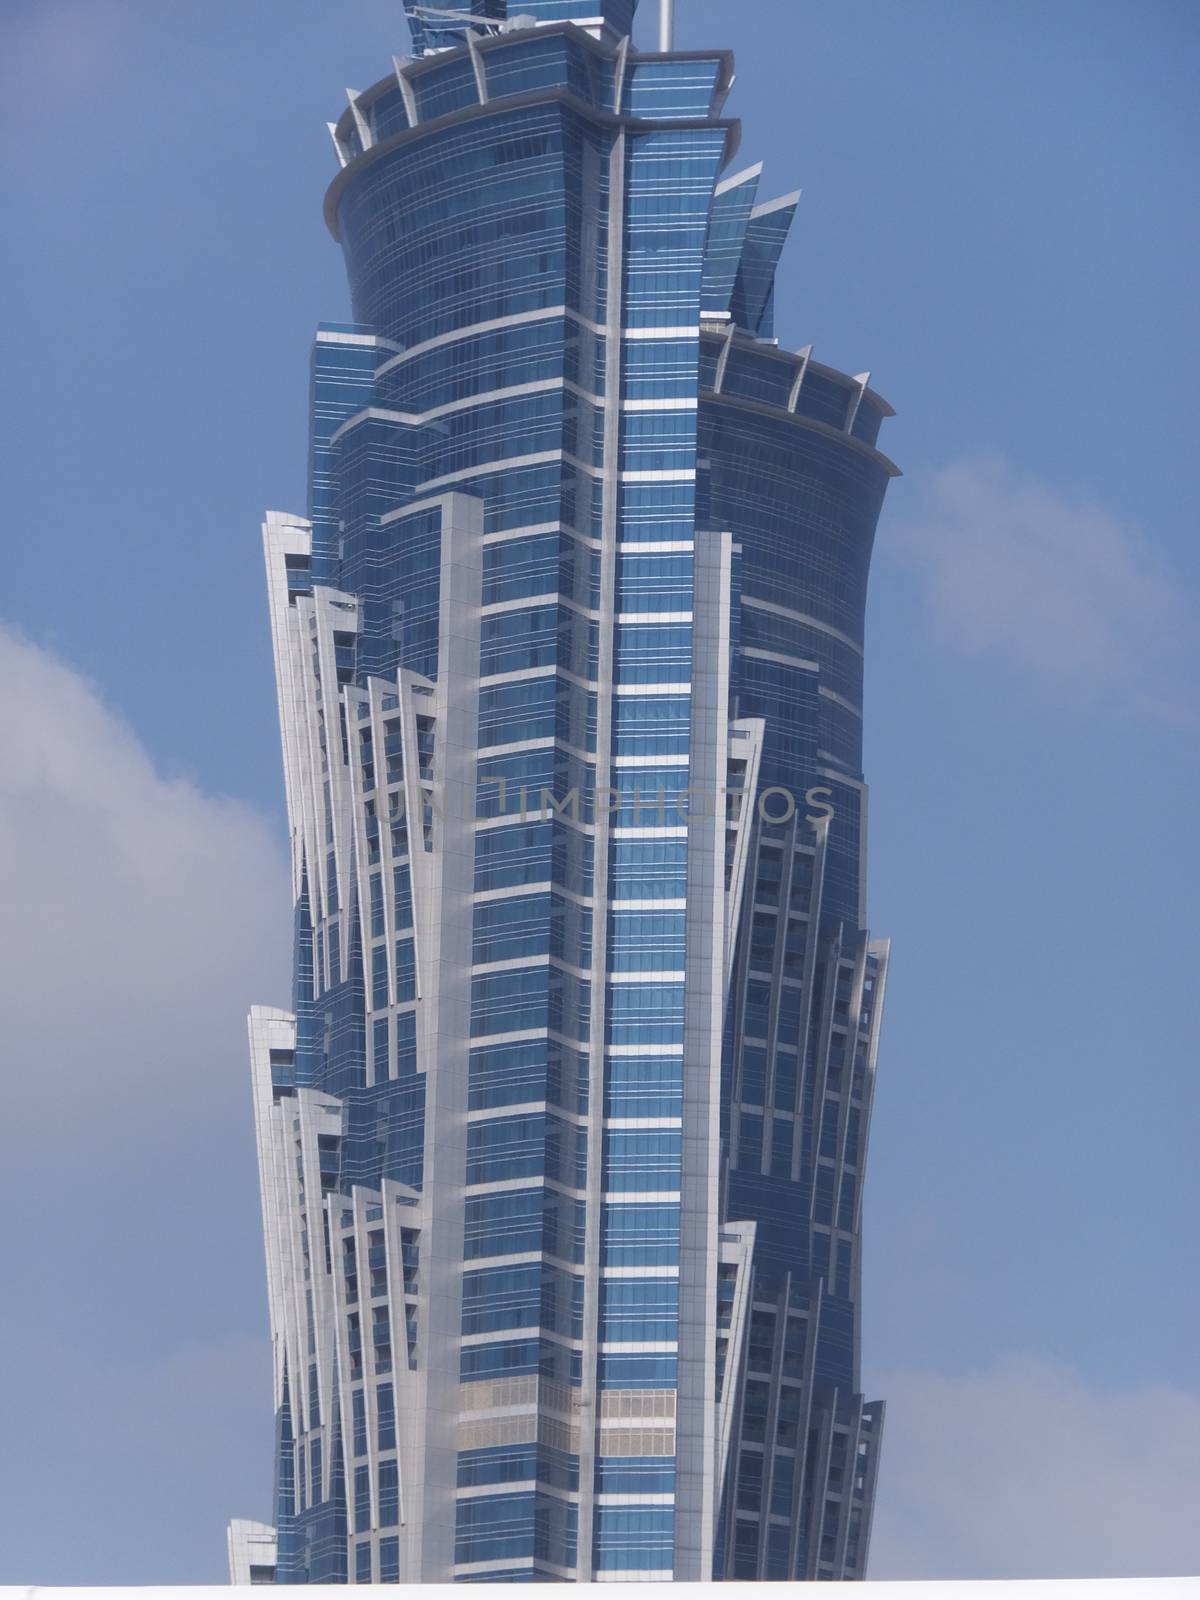 JW Marriott Marquis Dubai, UAE by sainaniritu